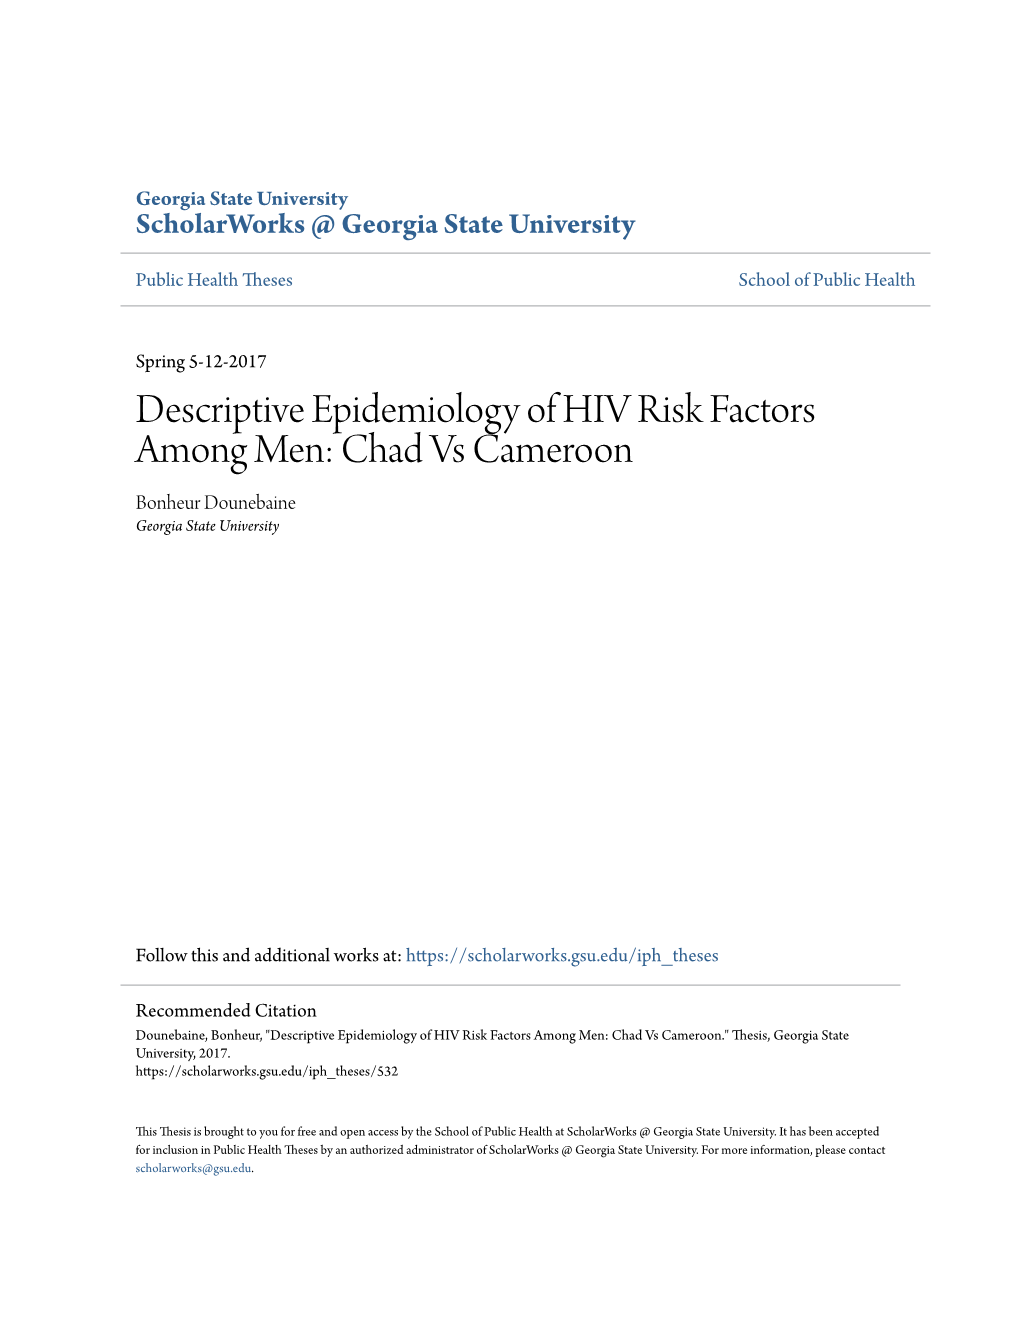 Descriptive Epidemiology of HIV Risk Factors Among Men: Chad Vs Cameroon Bonheur Dounebaine Georgia State University